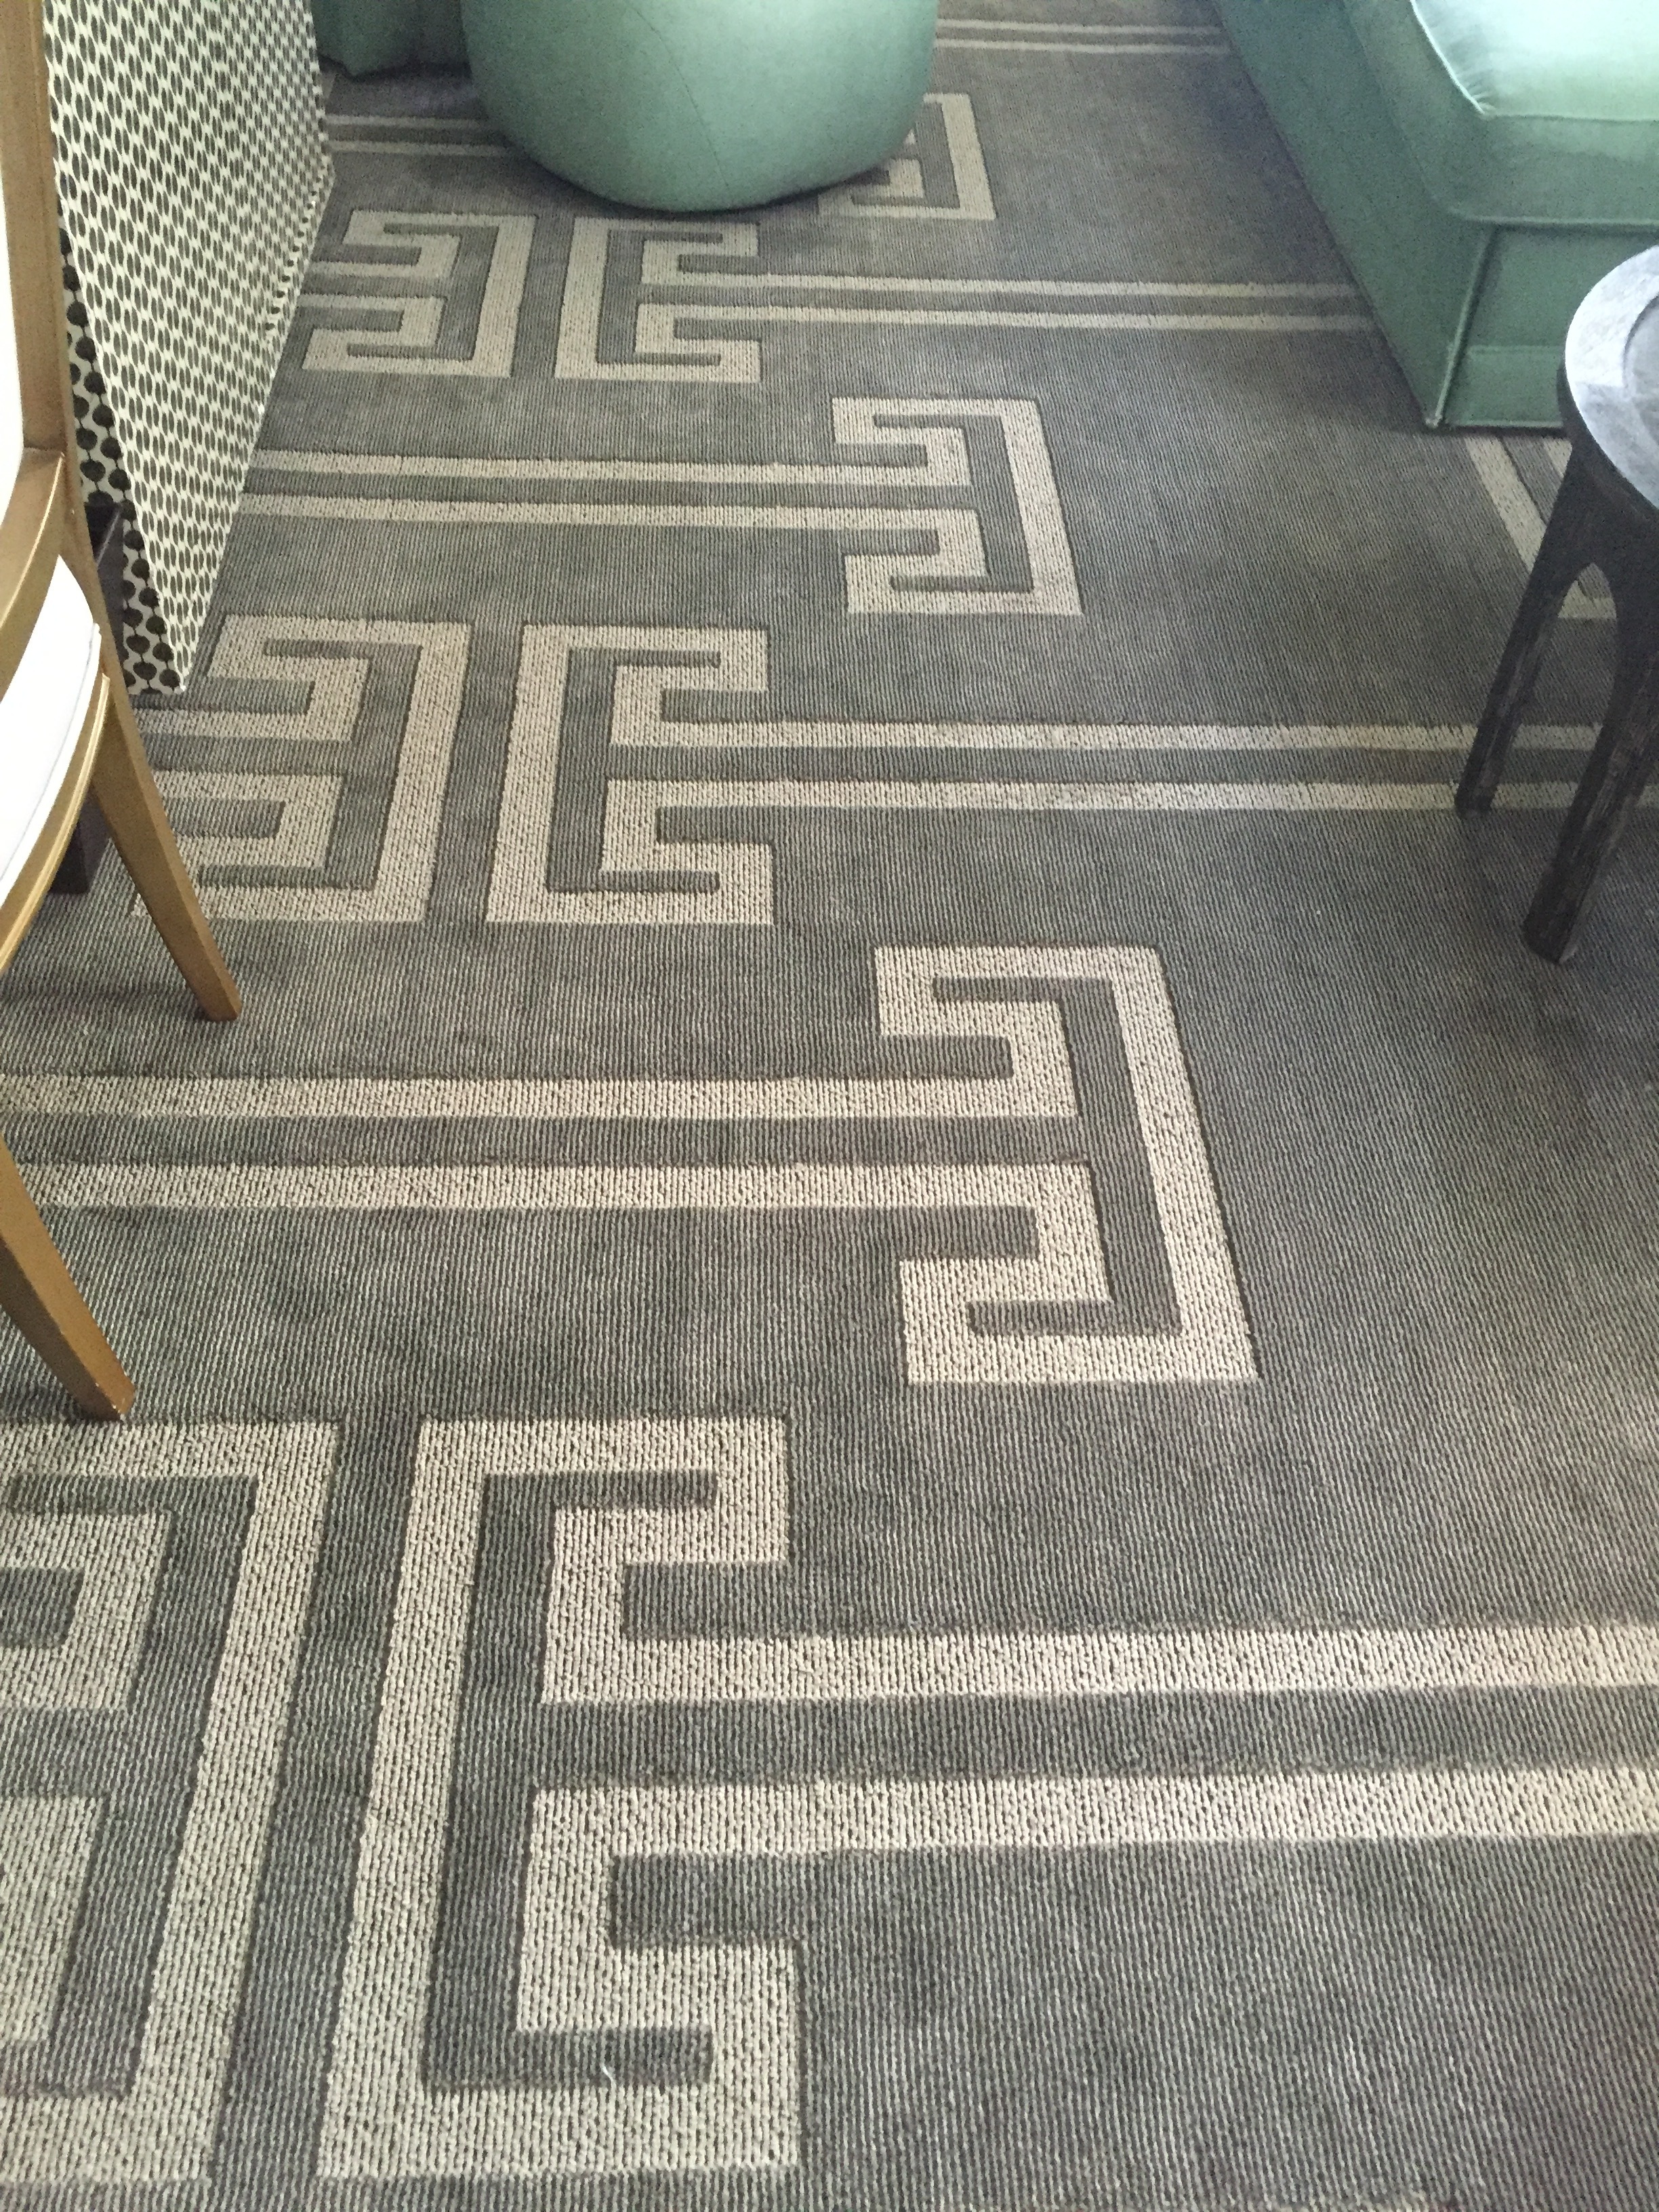 Viceroy Miami Corner Suite Carpet Detail